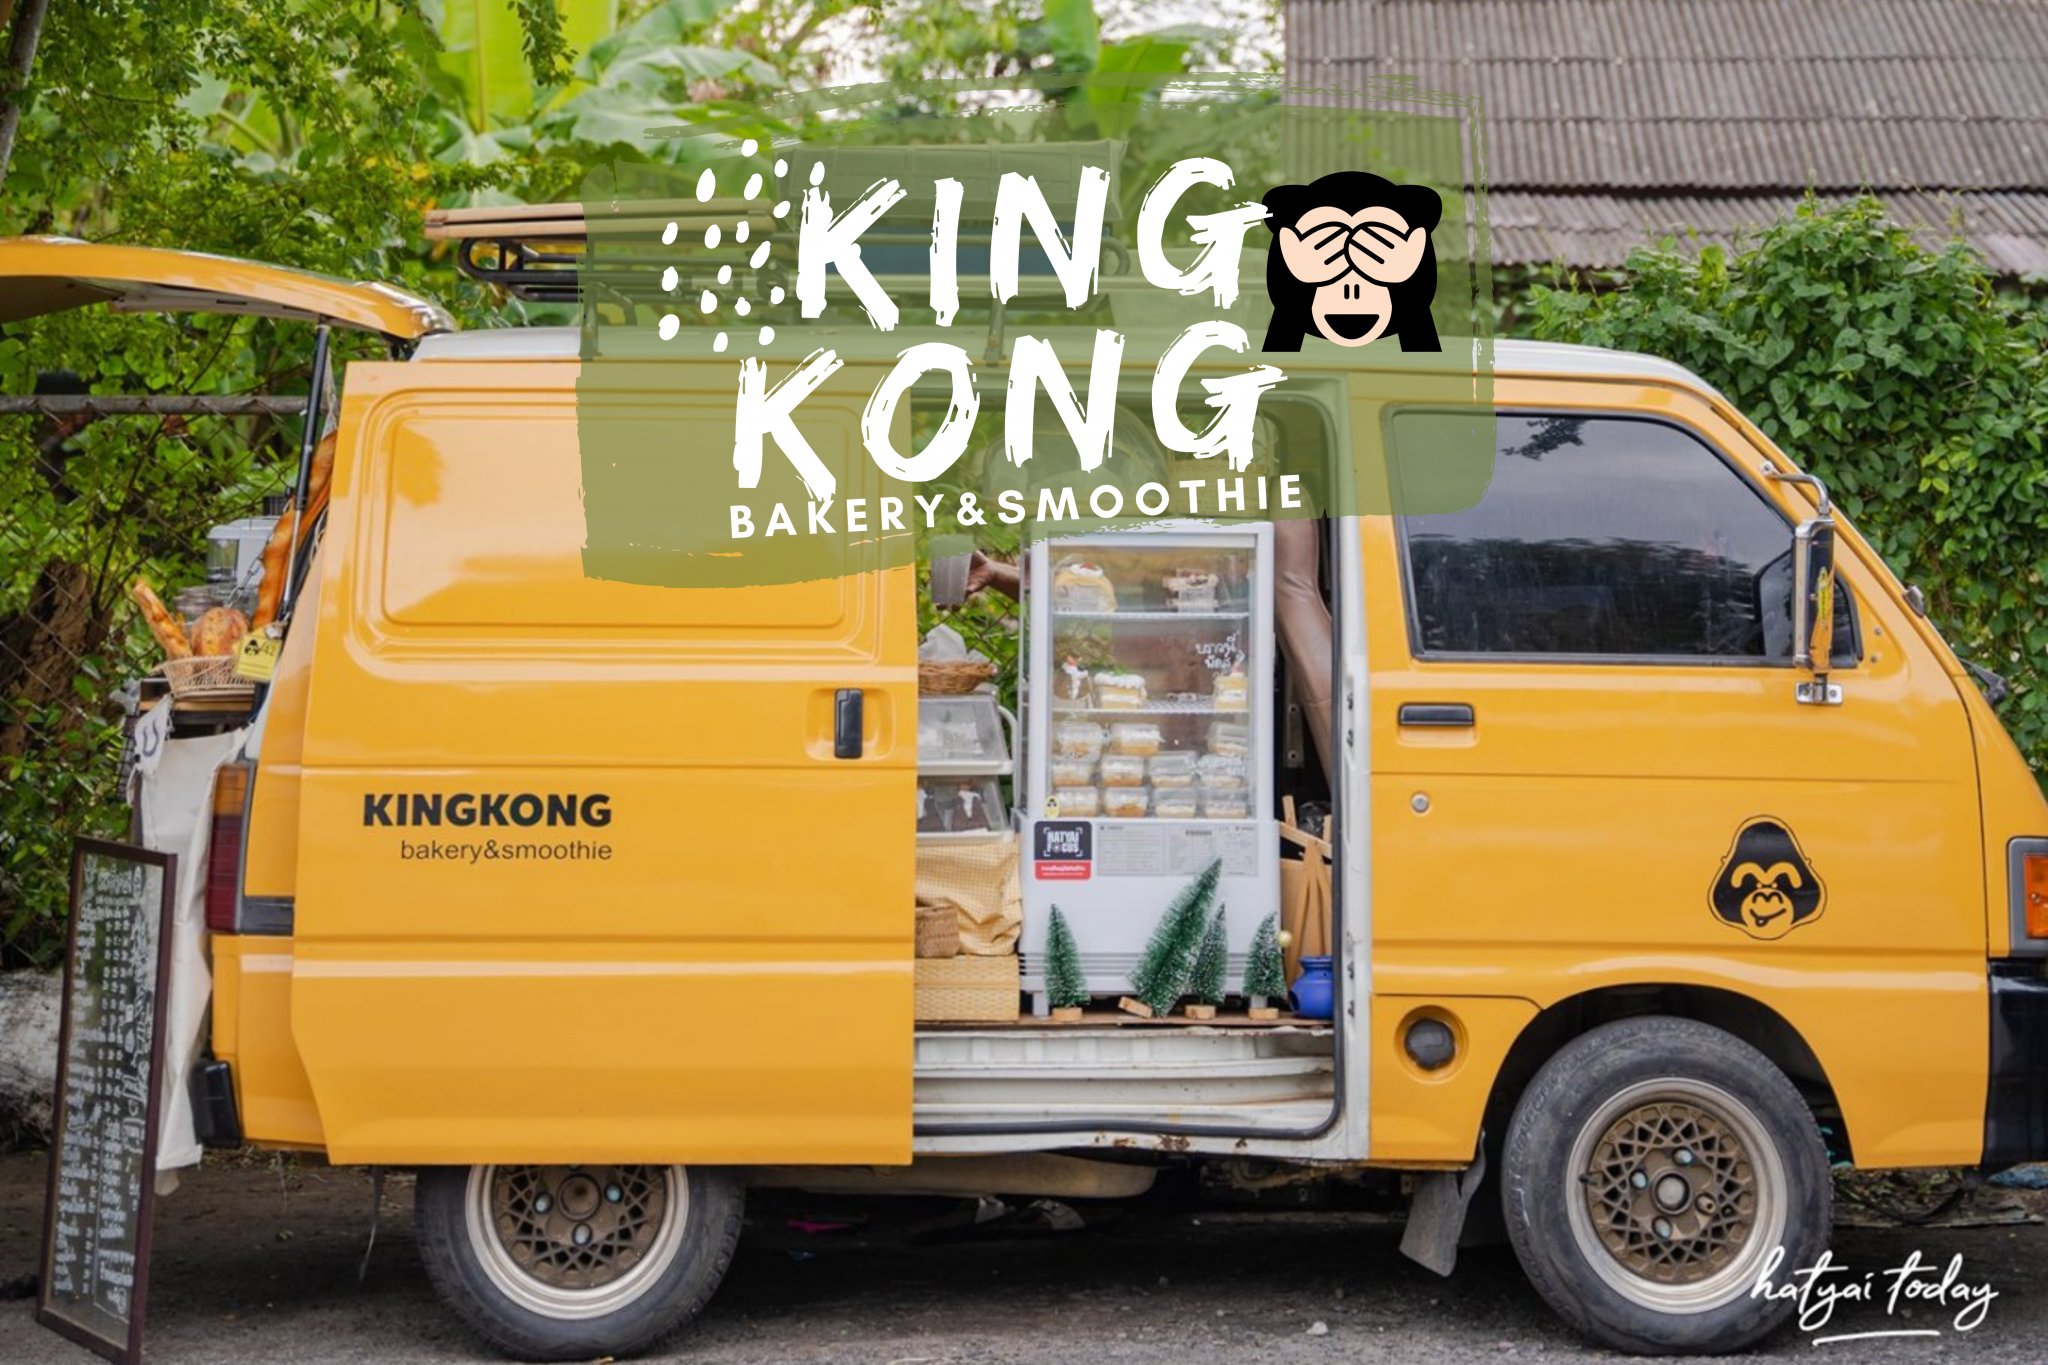 King kong bakery & smoothie